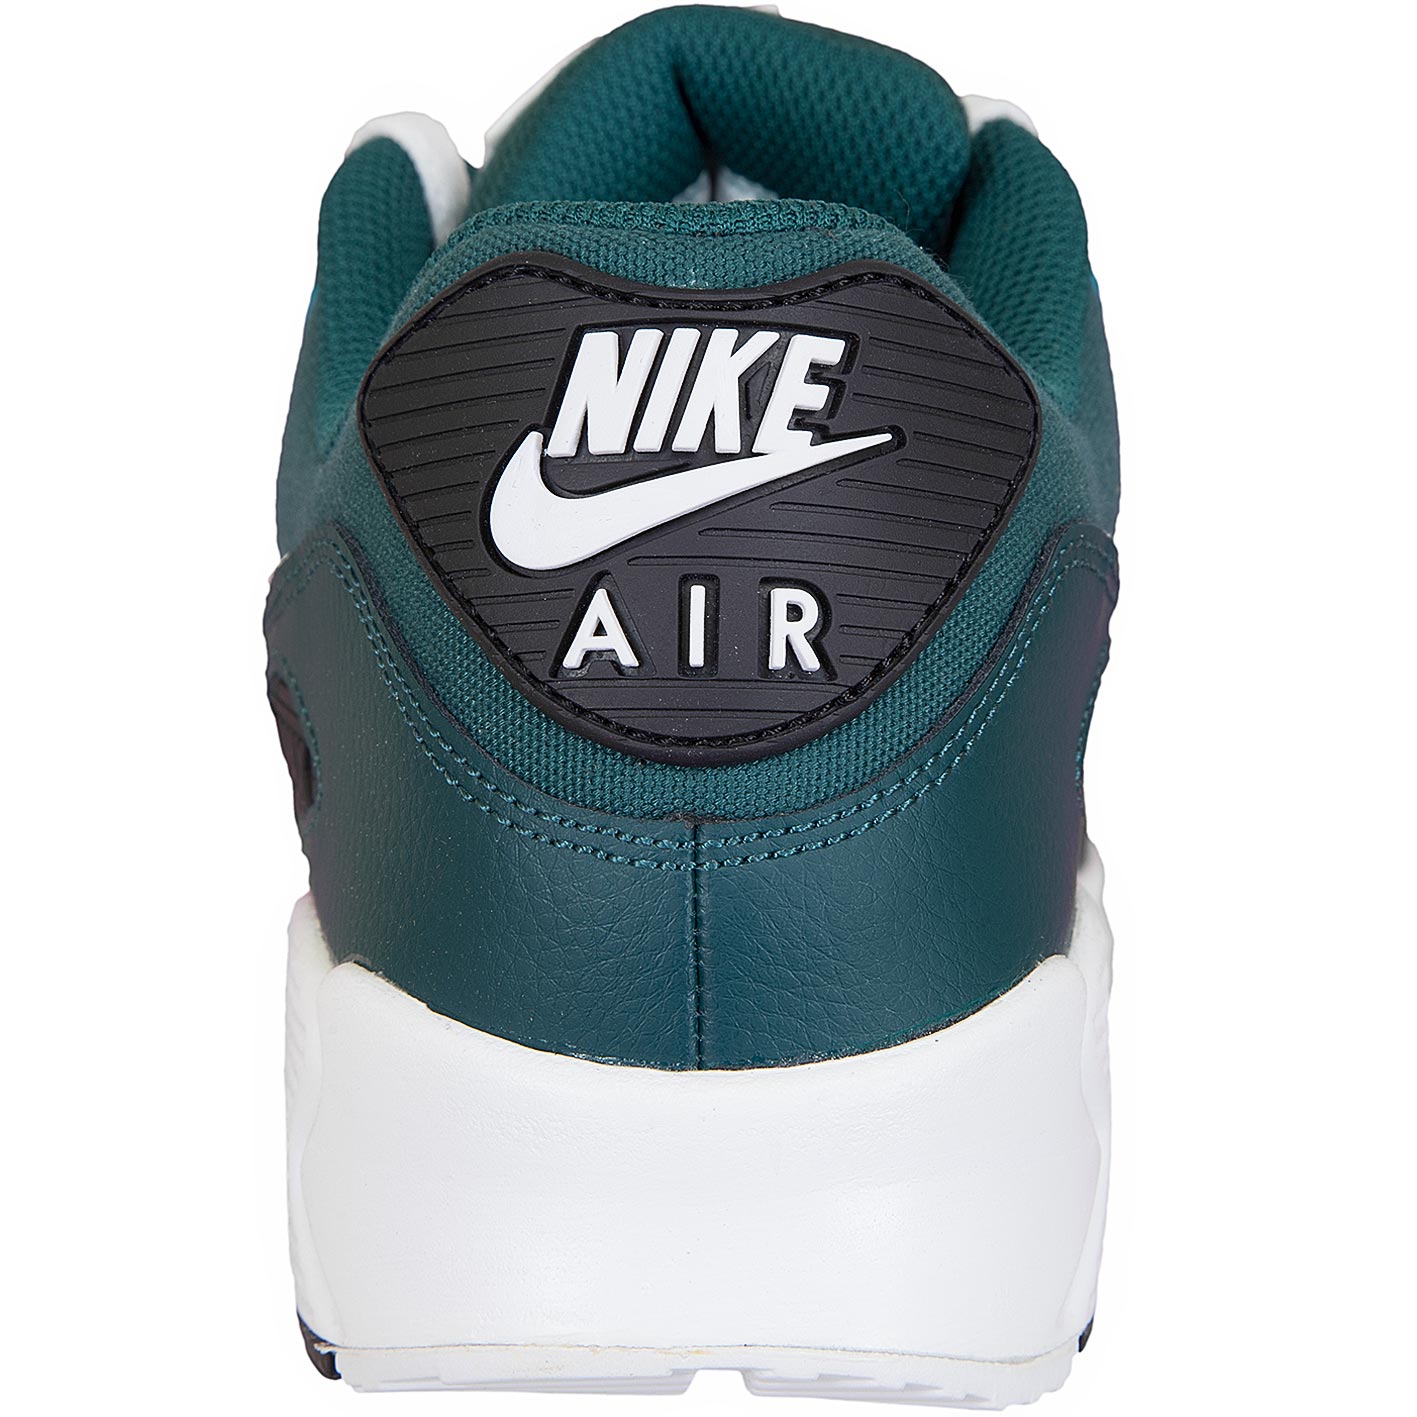 ☆ Nike Sneaker Air Max 90 Essential grün - hier bestellen!